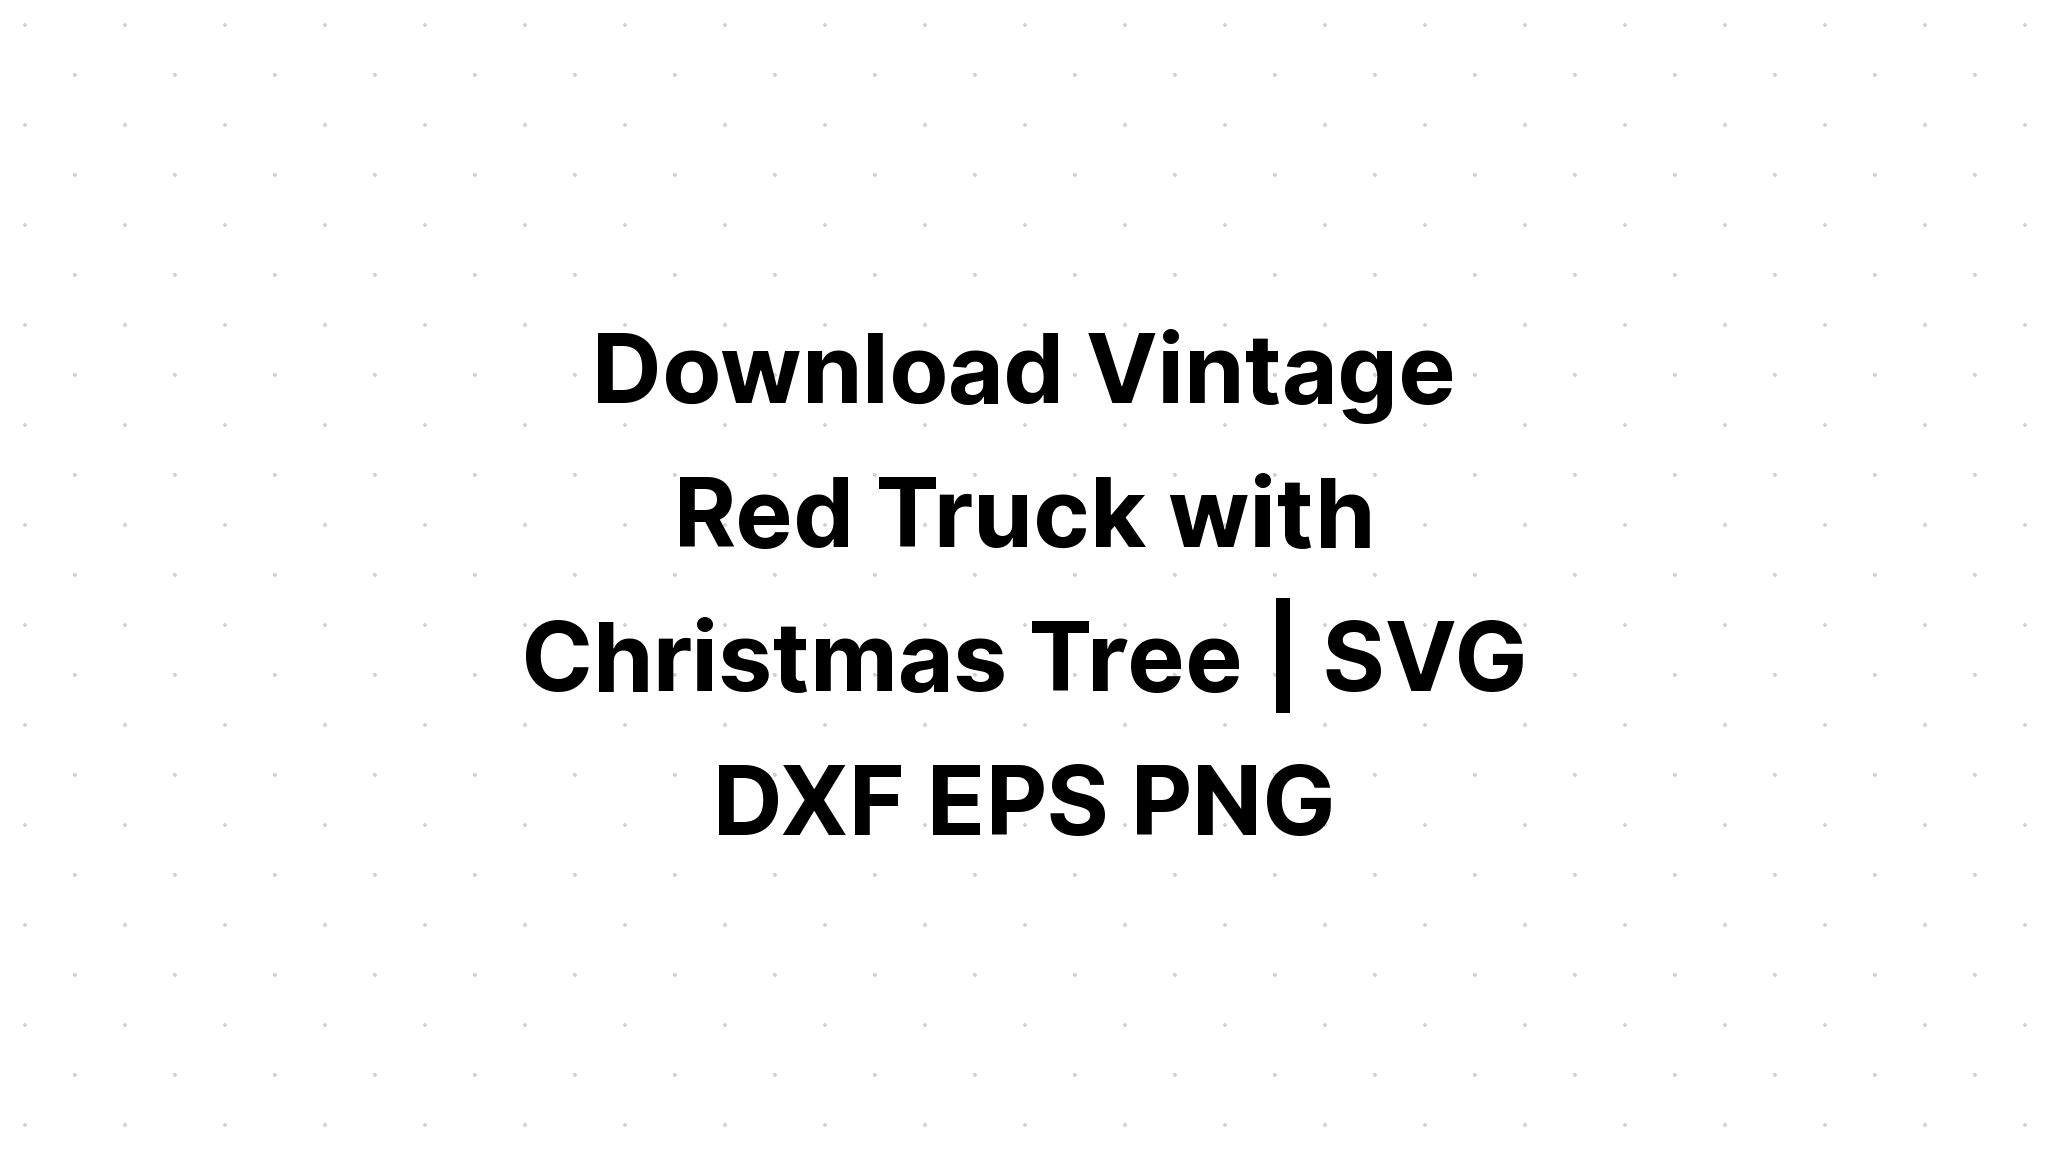 Download Free Red Truck Svg Bundle - Layered SVG Cut File